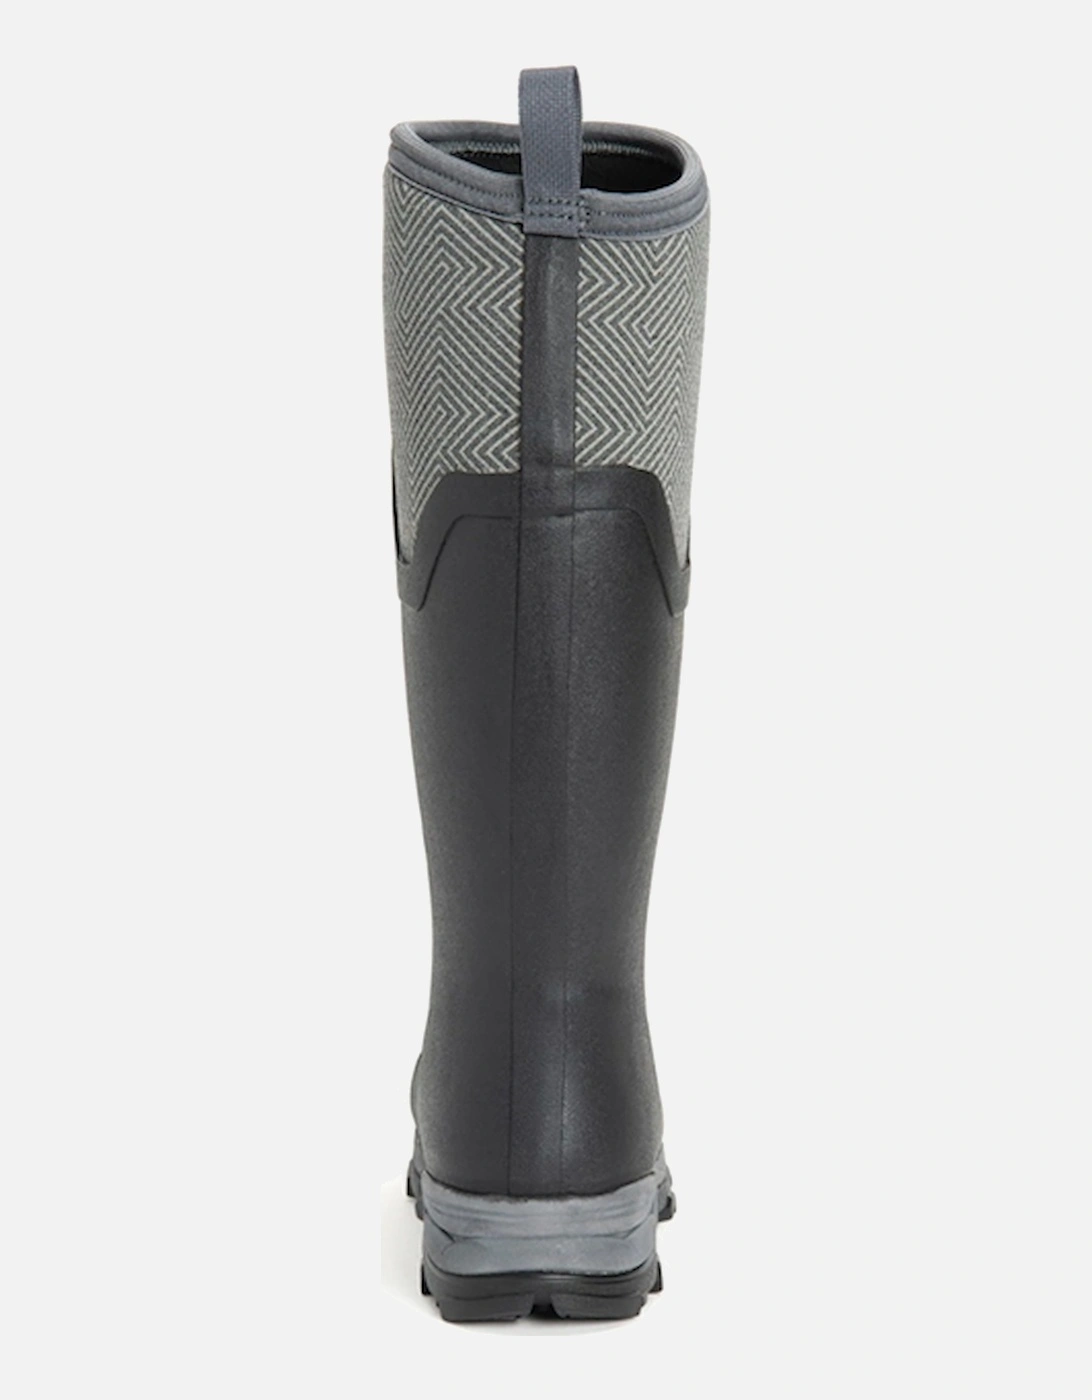 Muck Boots Women's Arctic Ice Tall Wellies Black/Grey Heather DFS